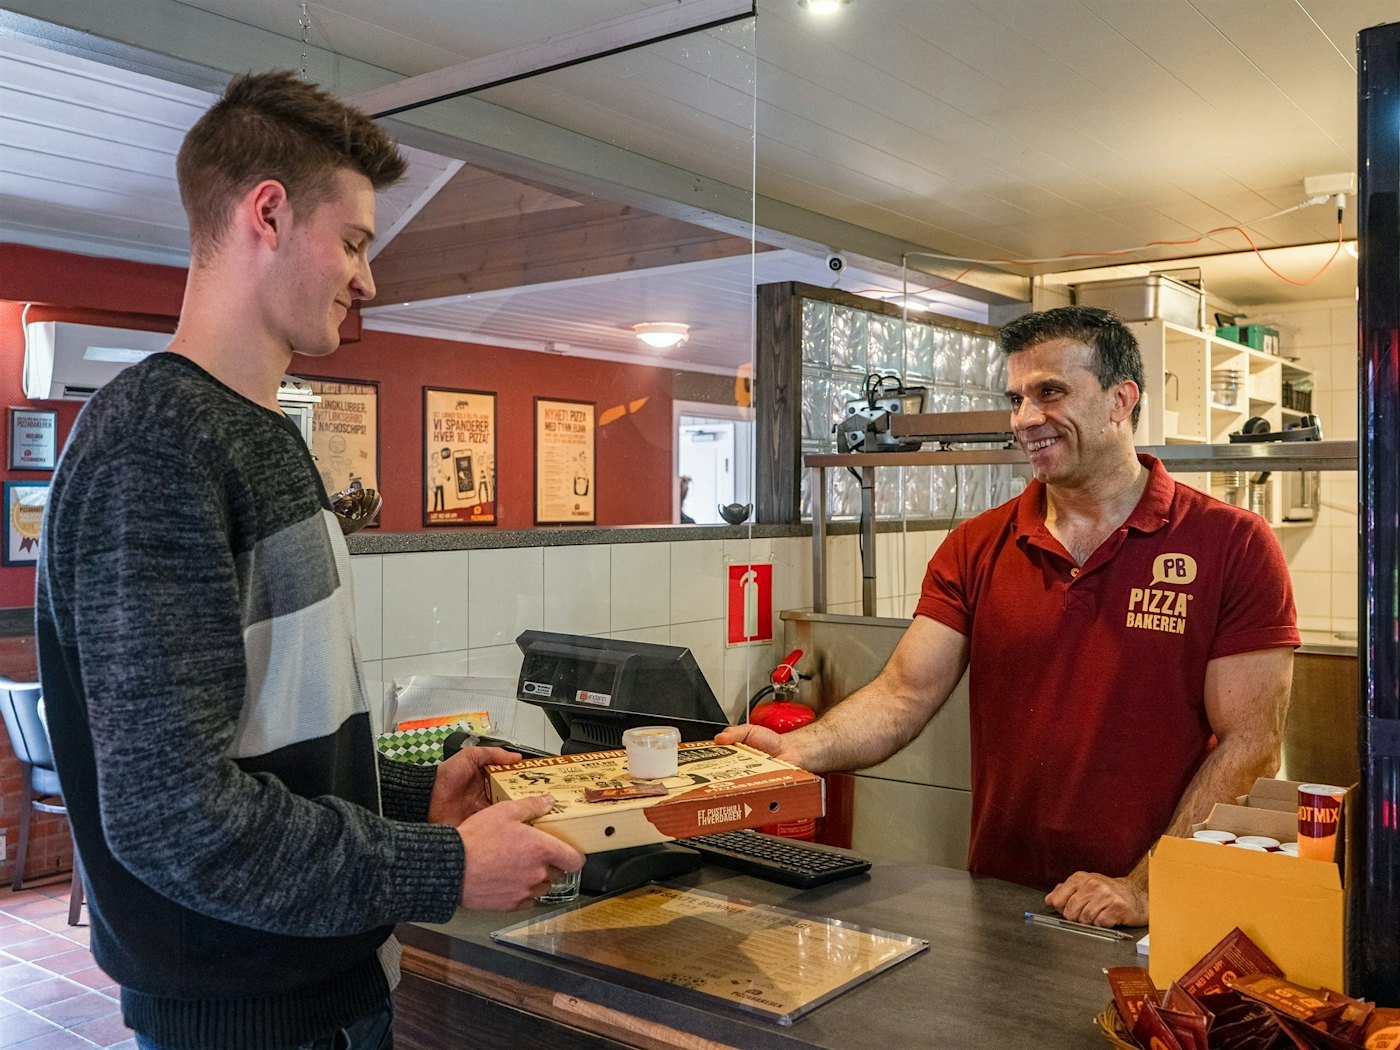 Servitør leverer takeout-pizza til kunde.